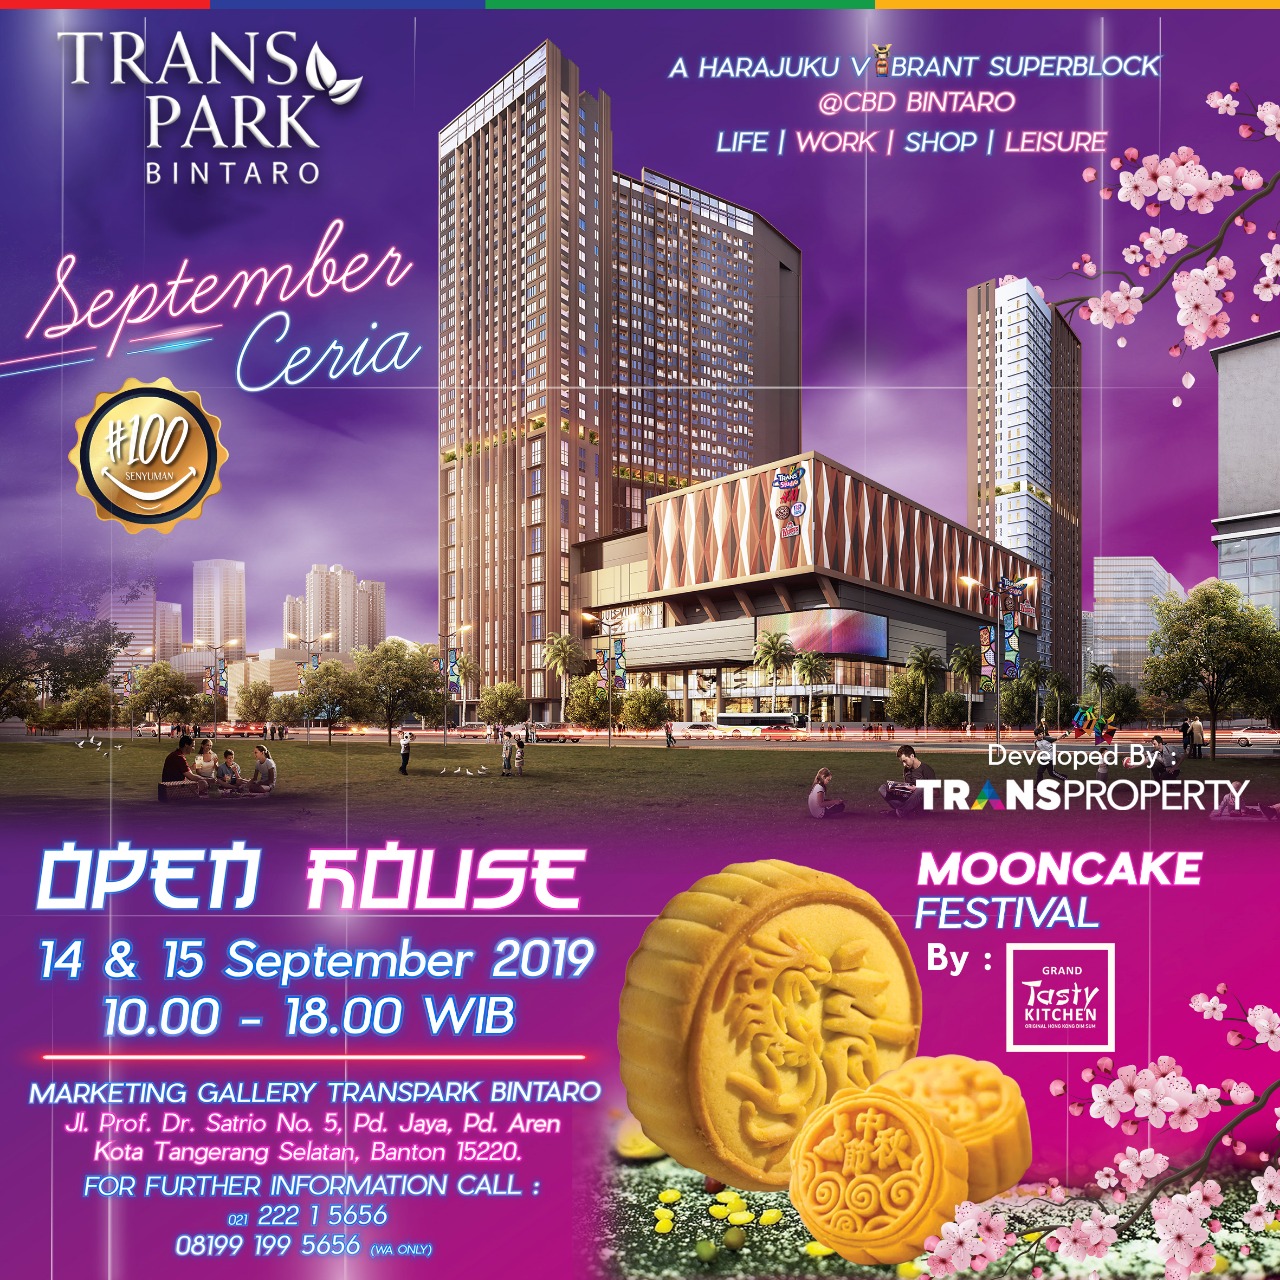 Open House Transpark Bintaro 14 & 15 September 2019